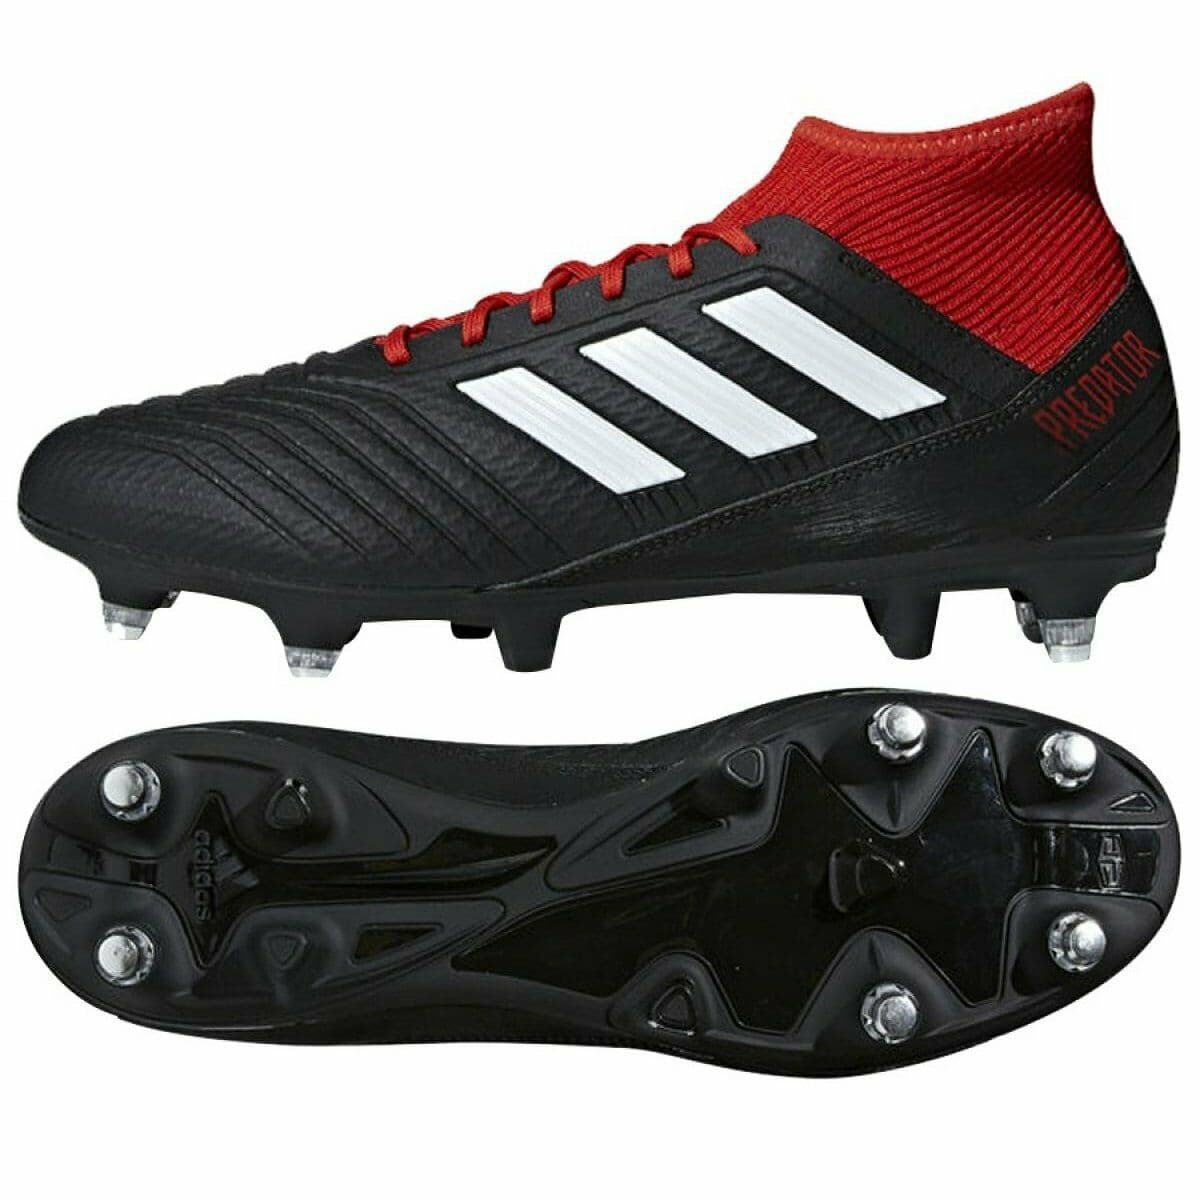 Adidas Predator 18.3 SG Football Boots